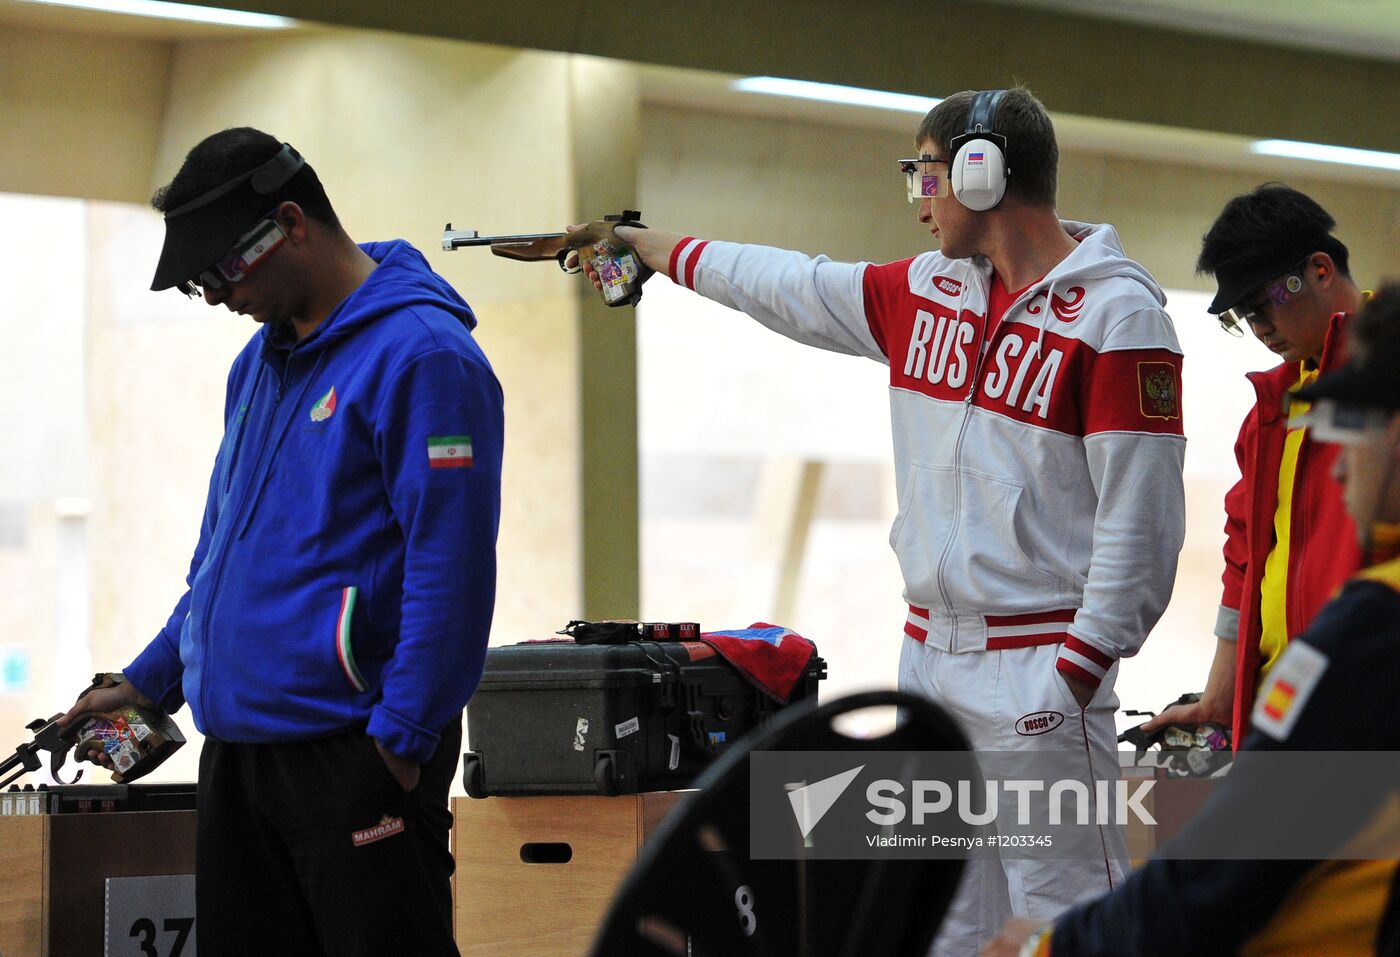 2012 Olympics. Shooting. Men's 50m Pistol